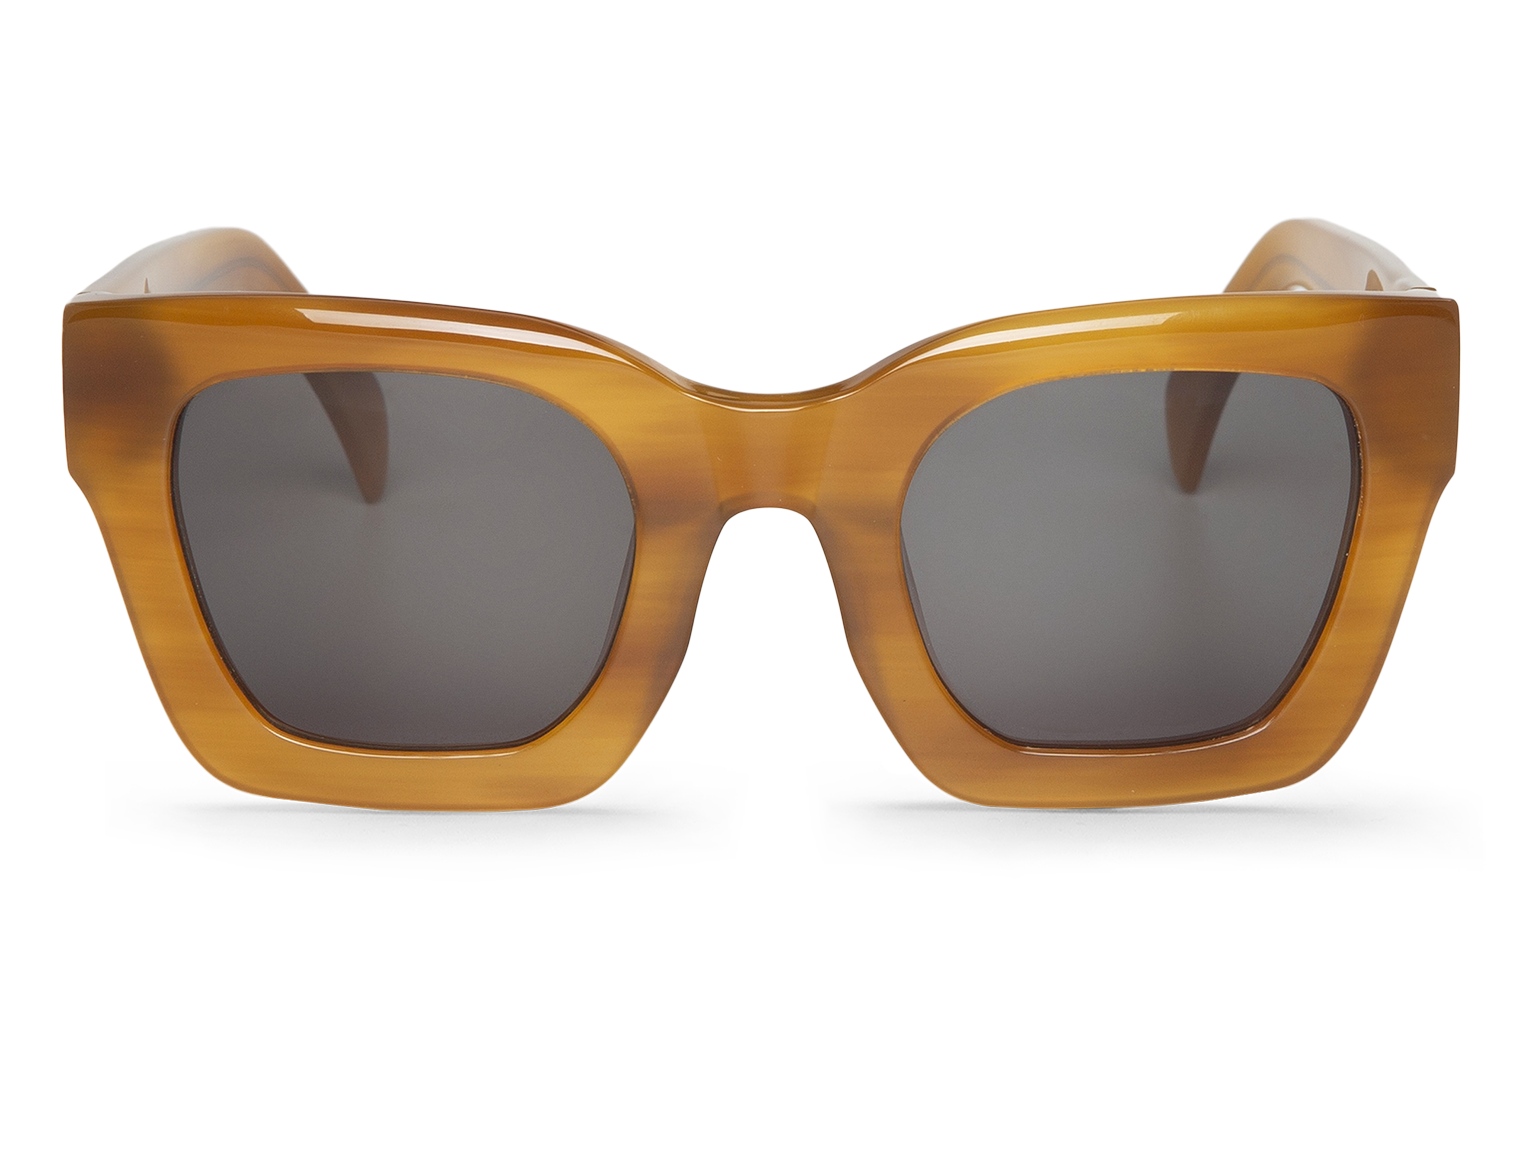 MR BOHO Warmth Bondi Sunglasses with Classical Lenses